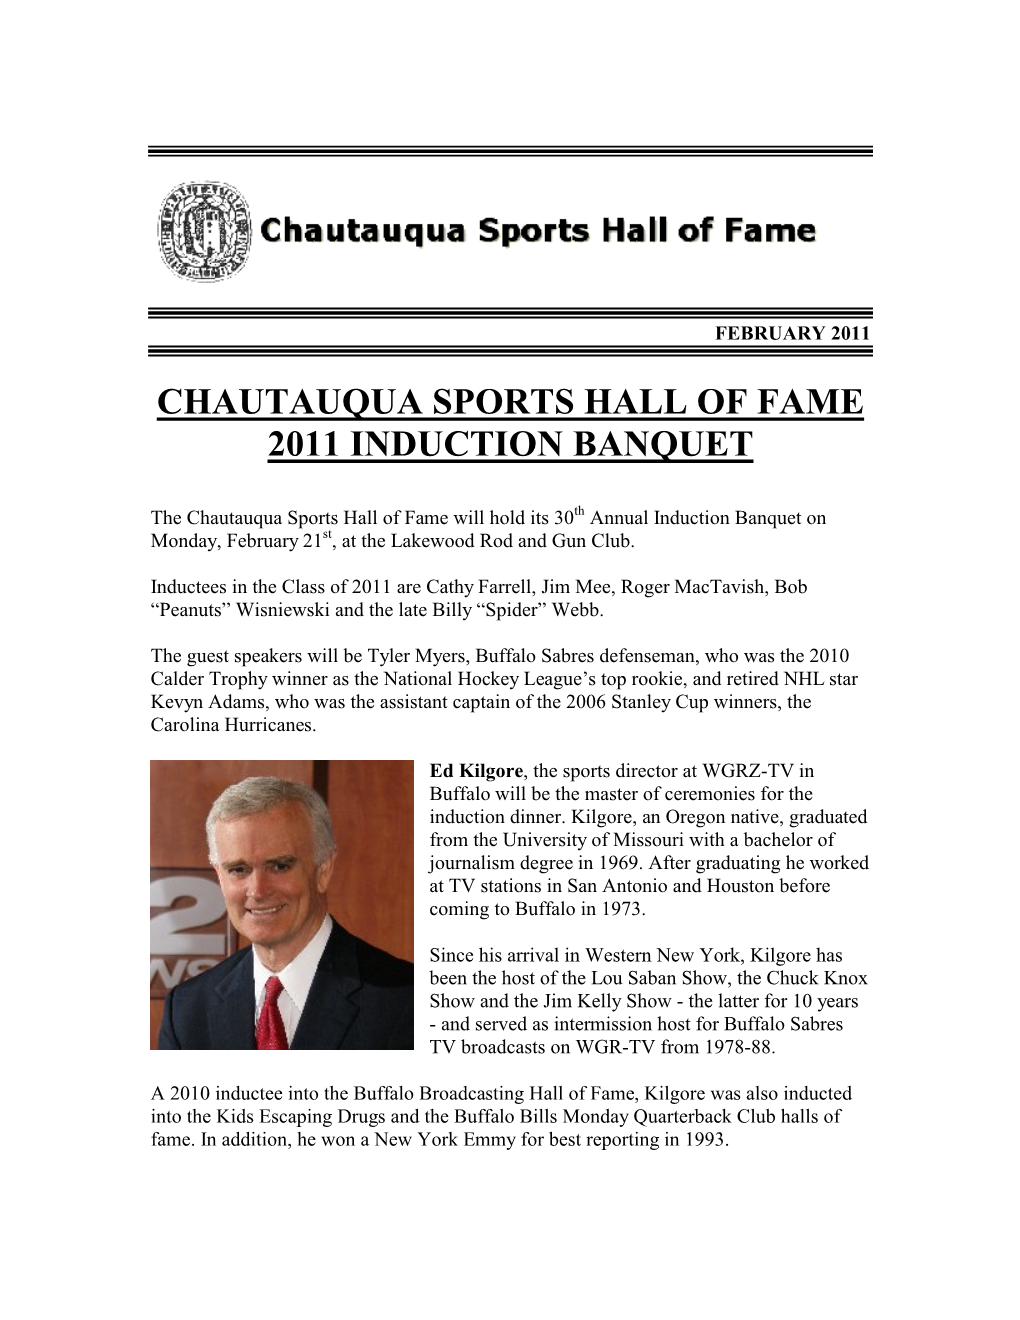 Chautauqua Sports Hall of Fame 2011 Induction Banquet